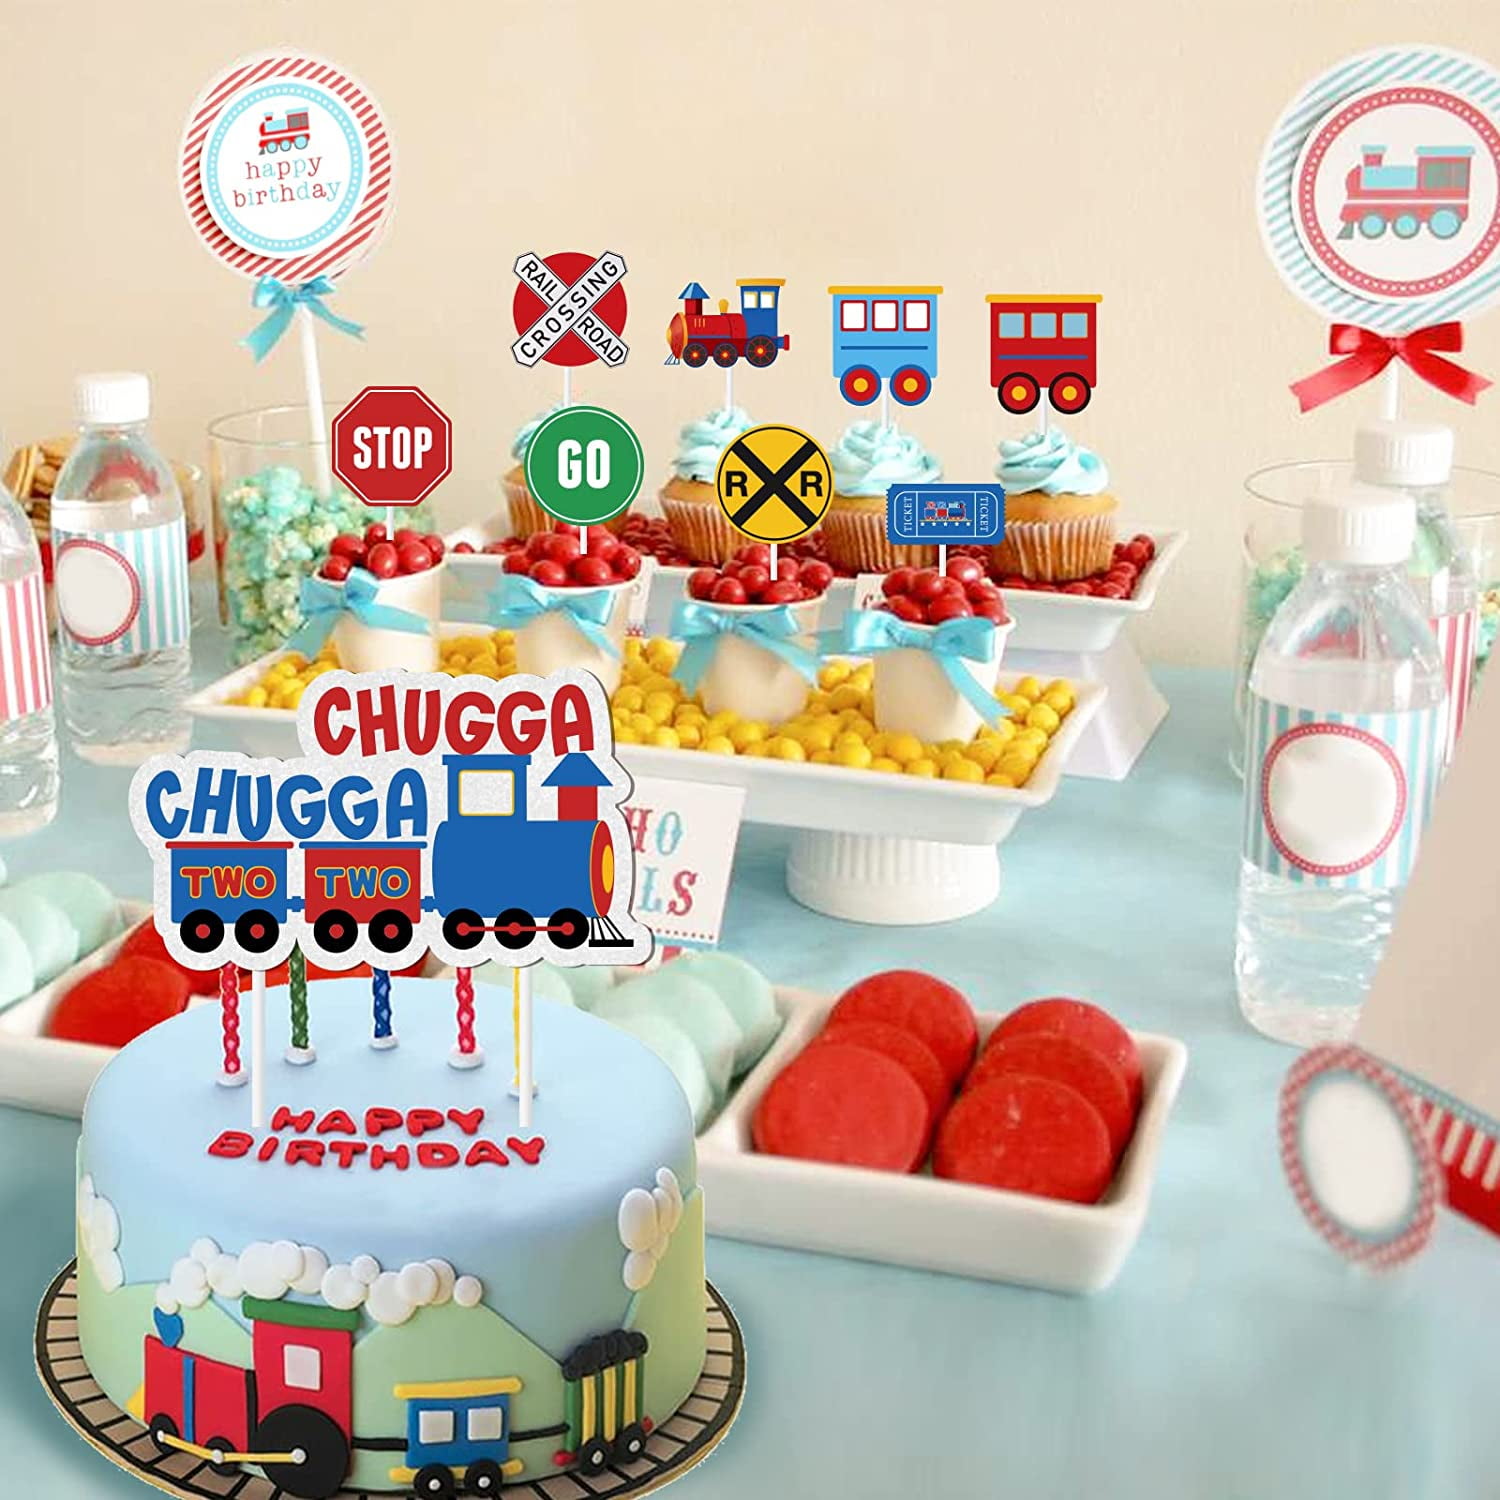 Choo-Choo All Aboard!🚂 A train-themed cake for a little birthday boy.... |  TikTok